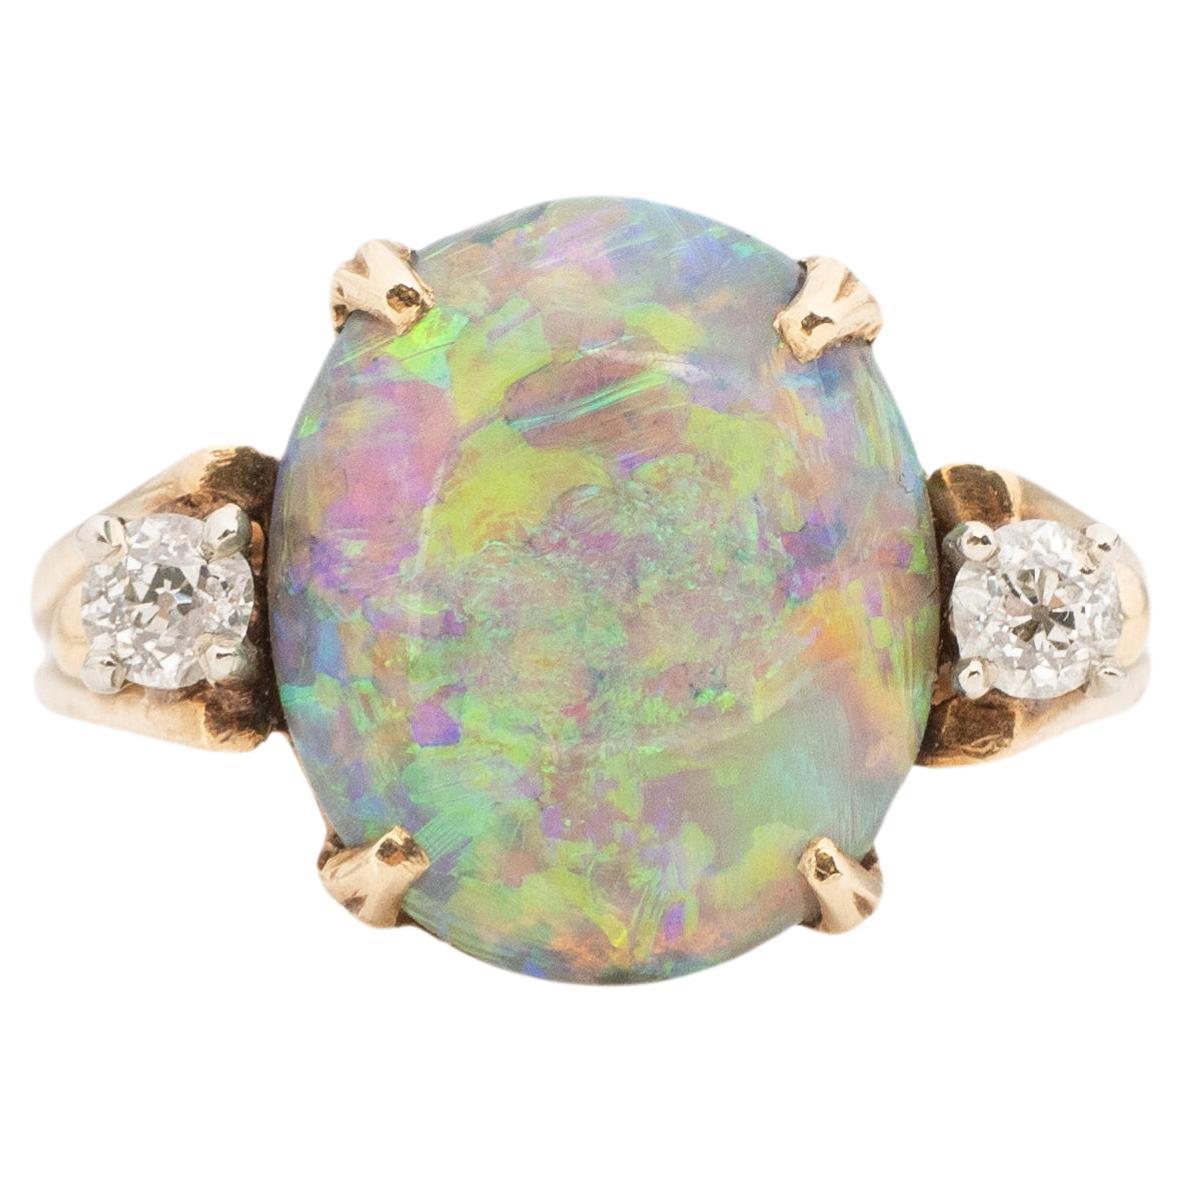 4.00 Carat Total Weight Art Deco Opal Diamond Engagement Ring